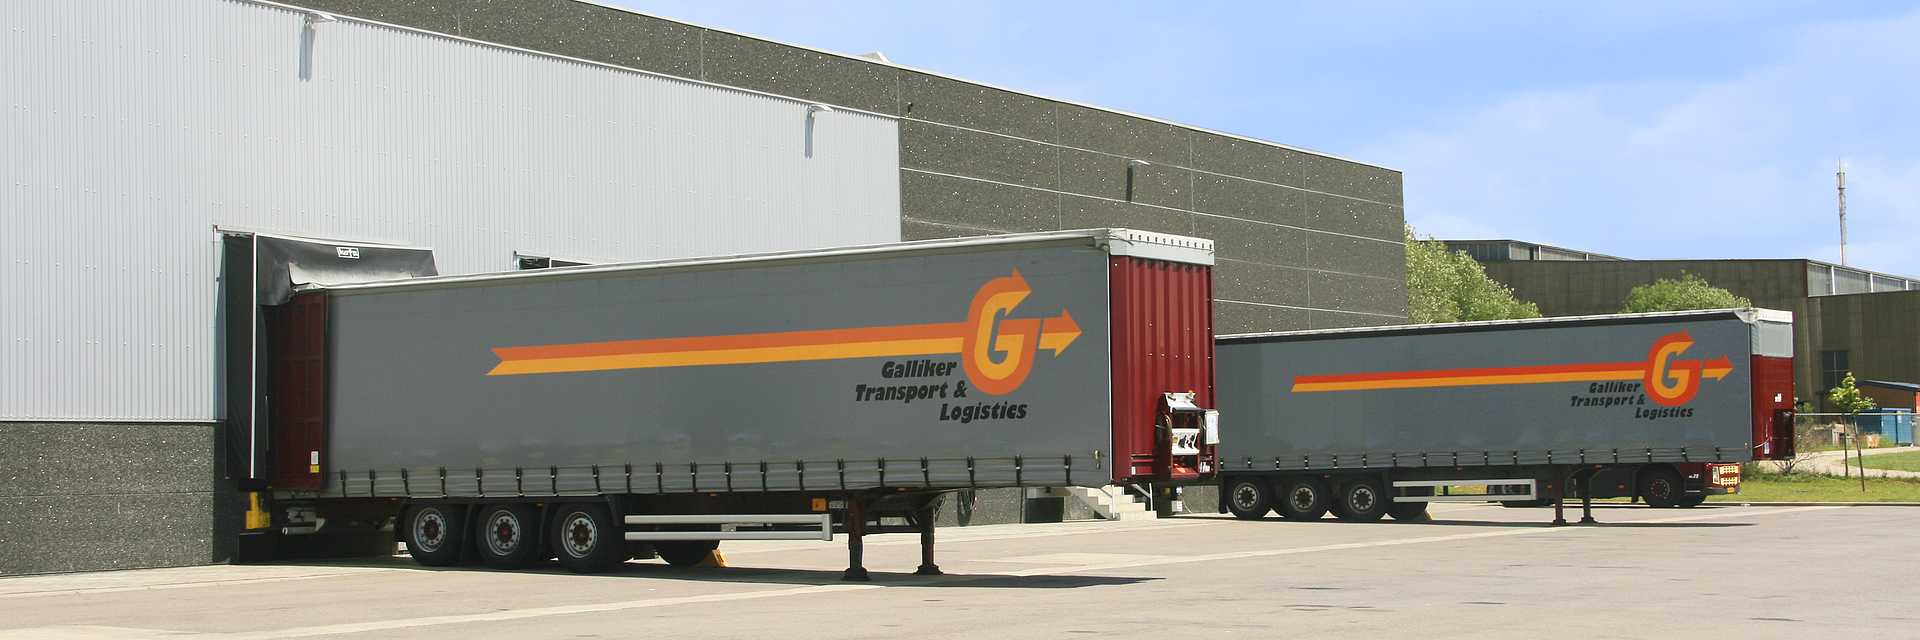 Galliker Transport Logistik TopPicture 139